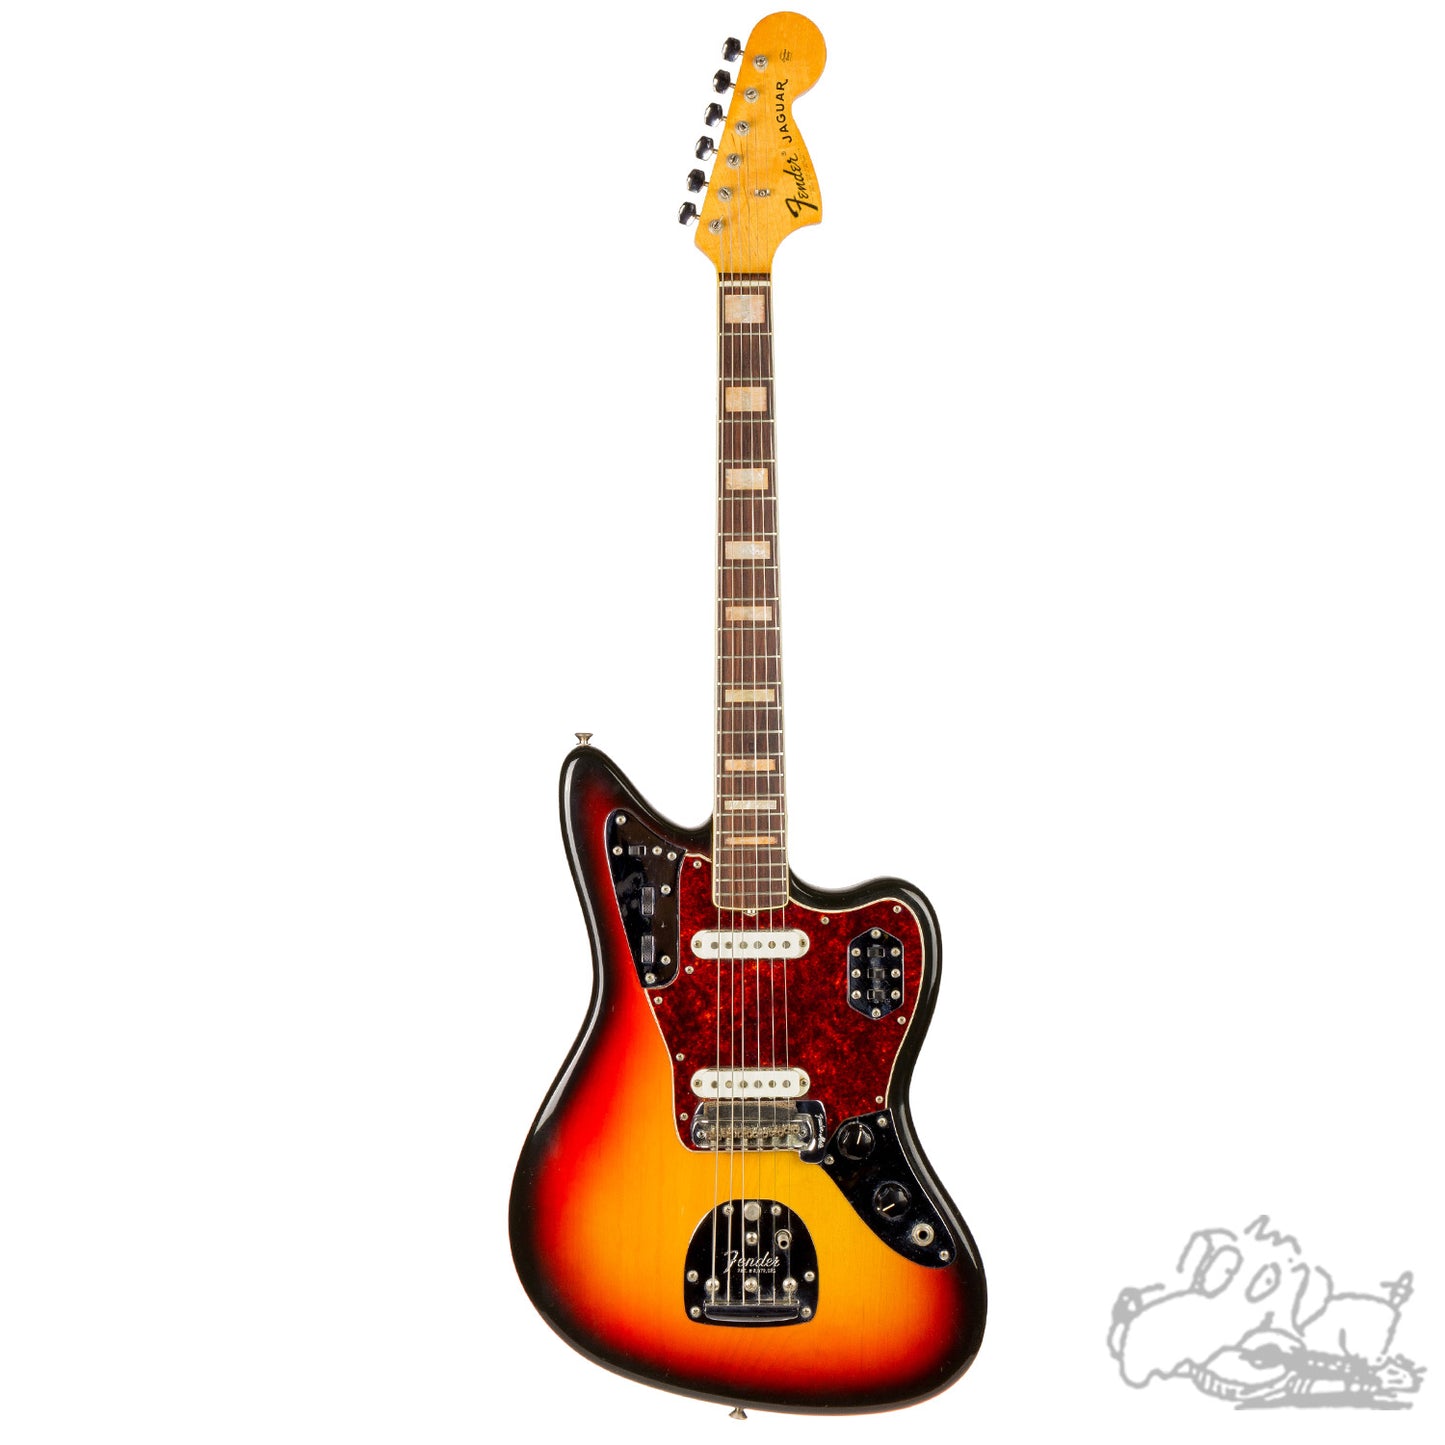 1971 Fender Jaguar